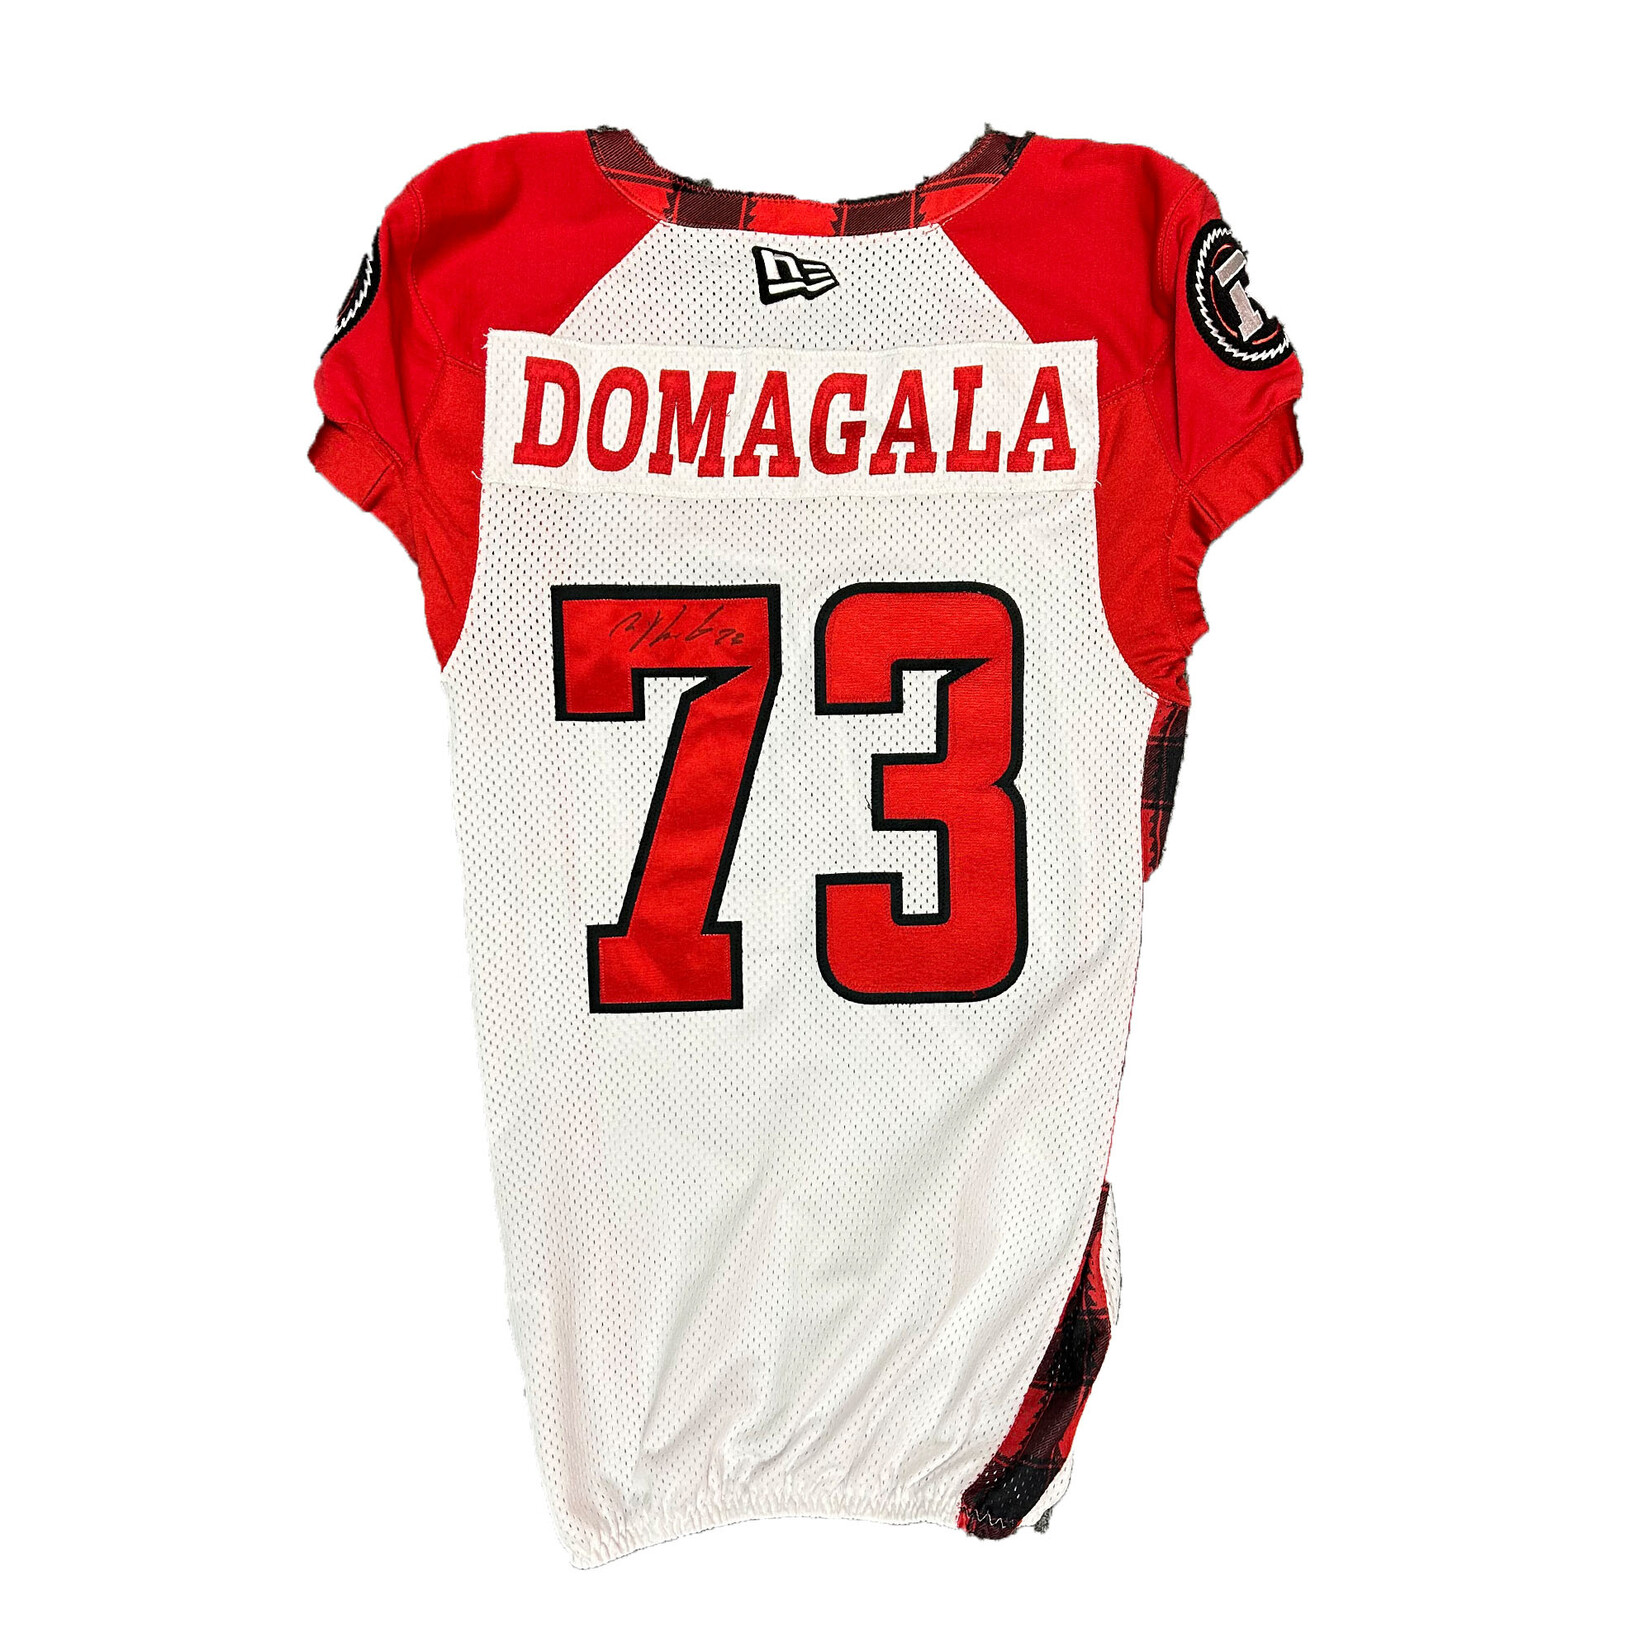 REDBLACKS REDBLACKS Domagala 2023 Game Issued Signed Jersey